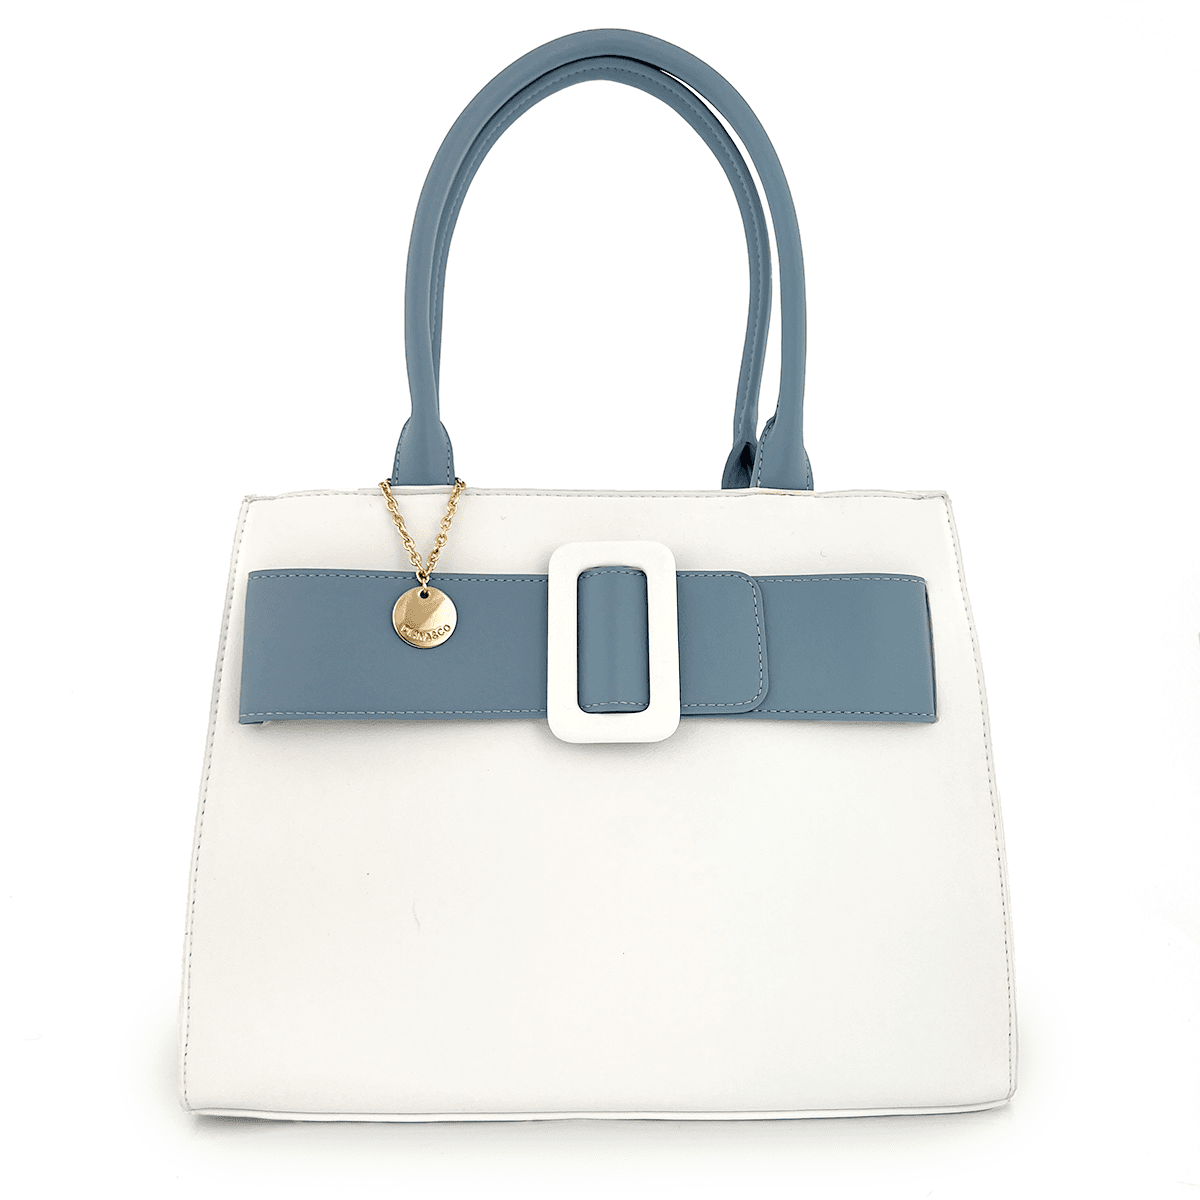 Diana & Co - Луксозaна дамска чанта - бяло/синьо